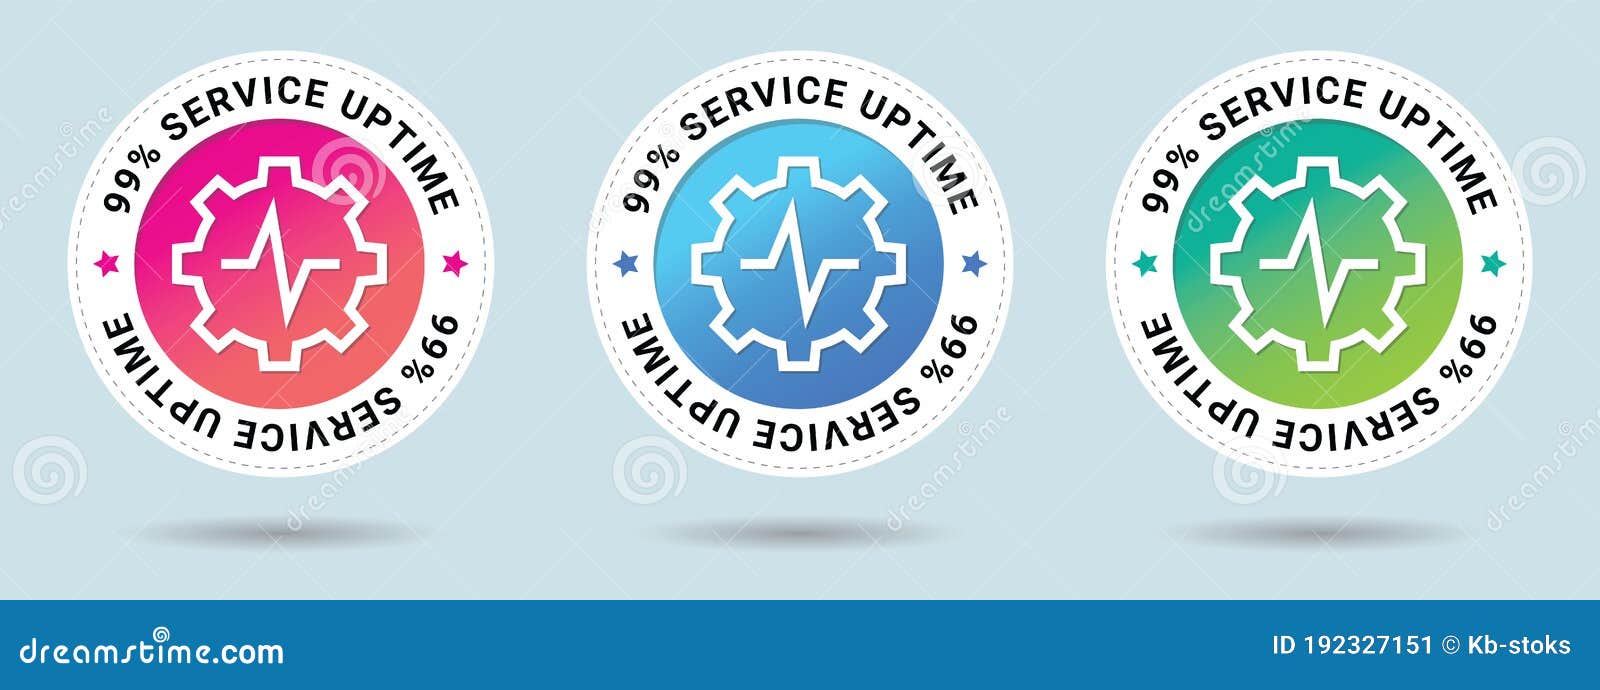 99% service uptime insignia stamp.